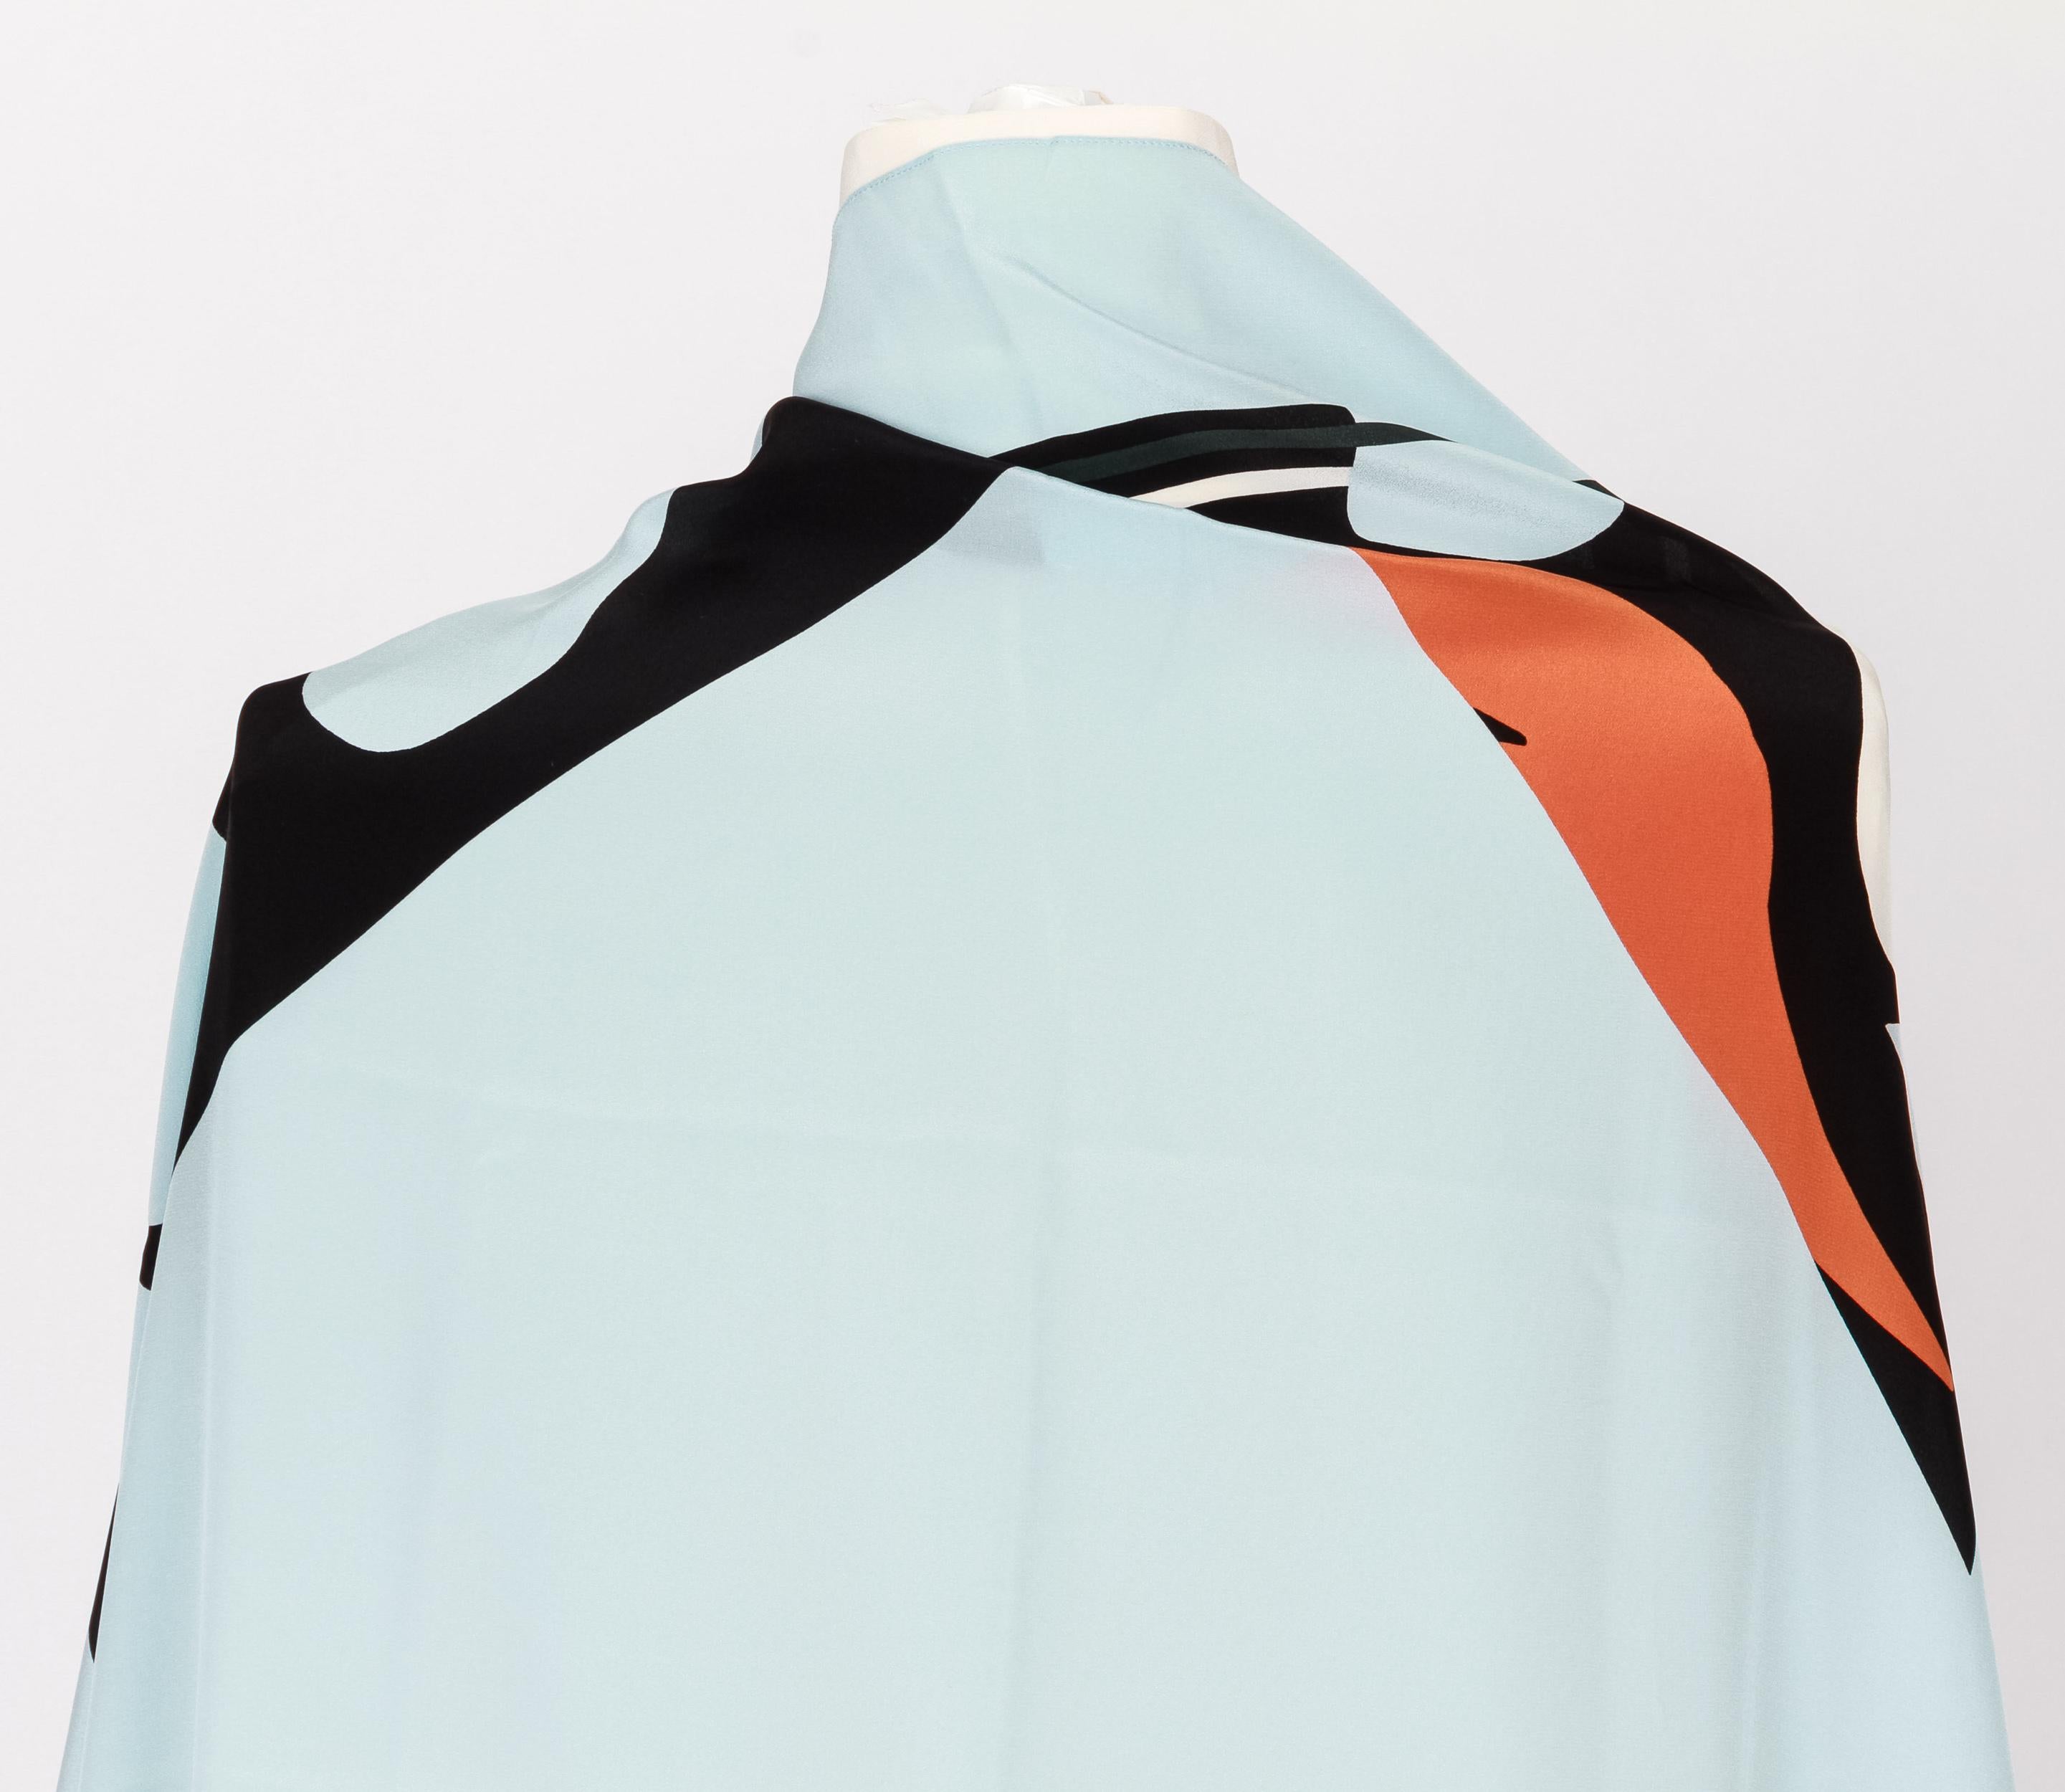 Dior brand new oversize shawl celeste, black, white abstract design,
100% soie
54